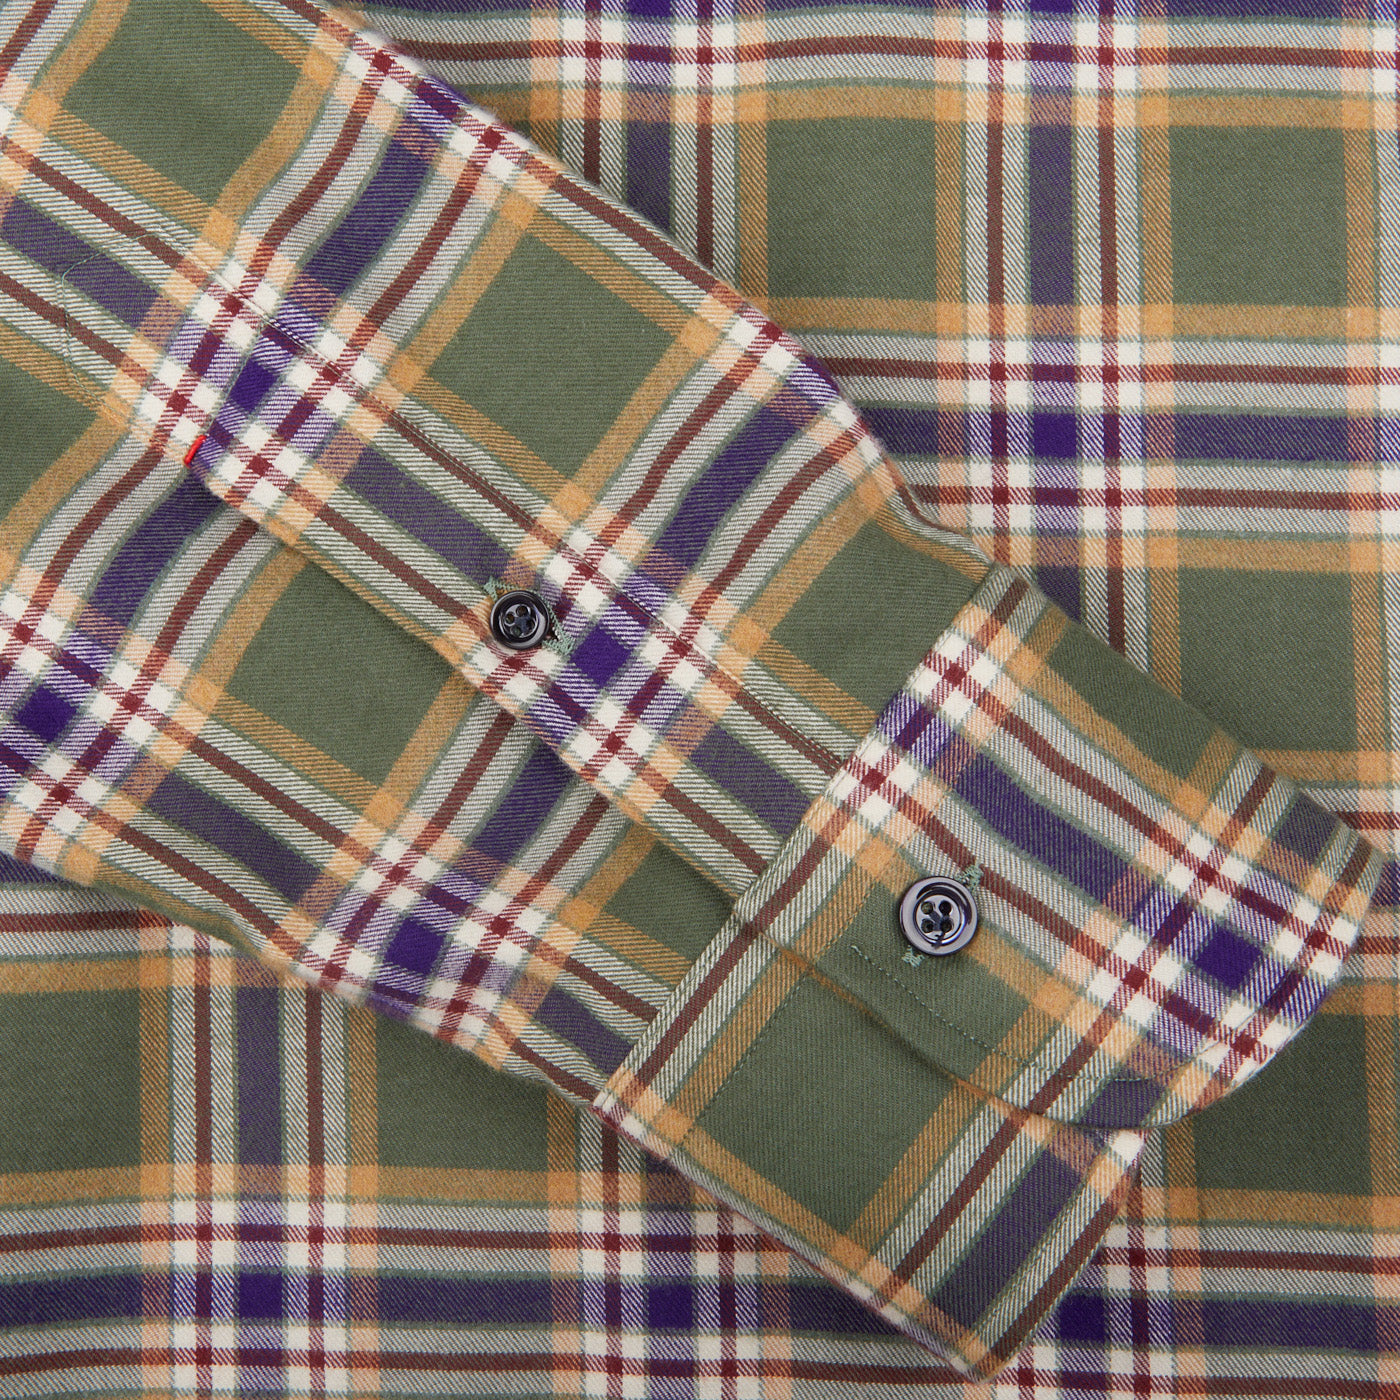 A close up of a Green Checked Brushed Cotton Regular Shirt made by Mazzarelli, an Italian shirtmaker.